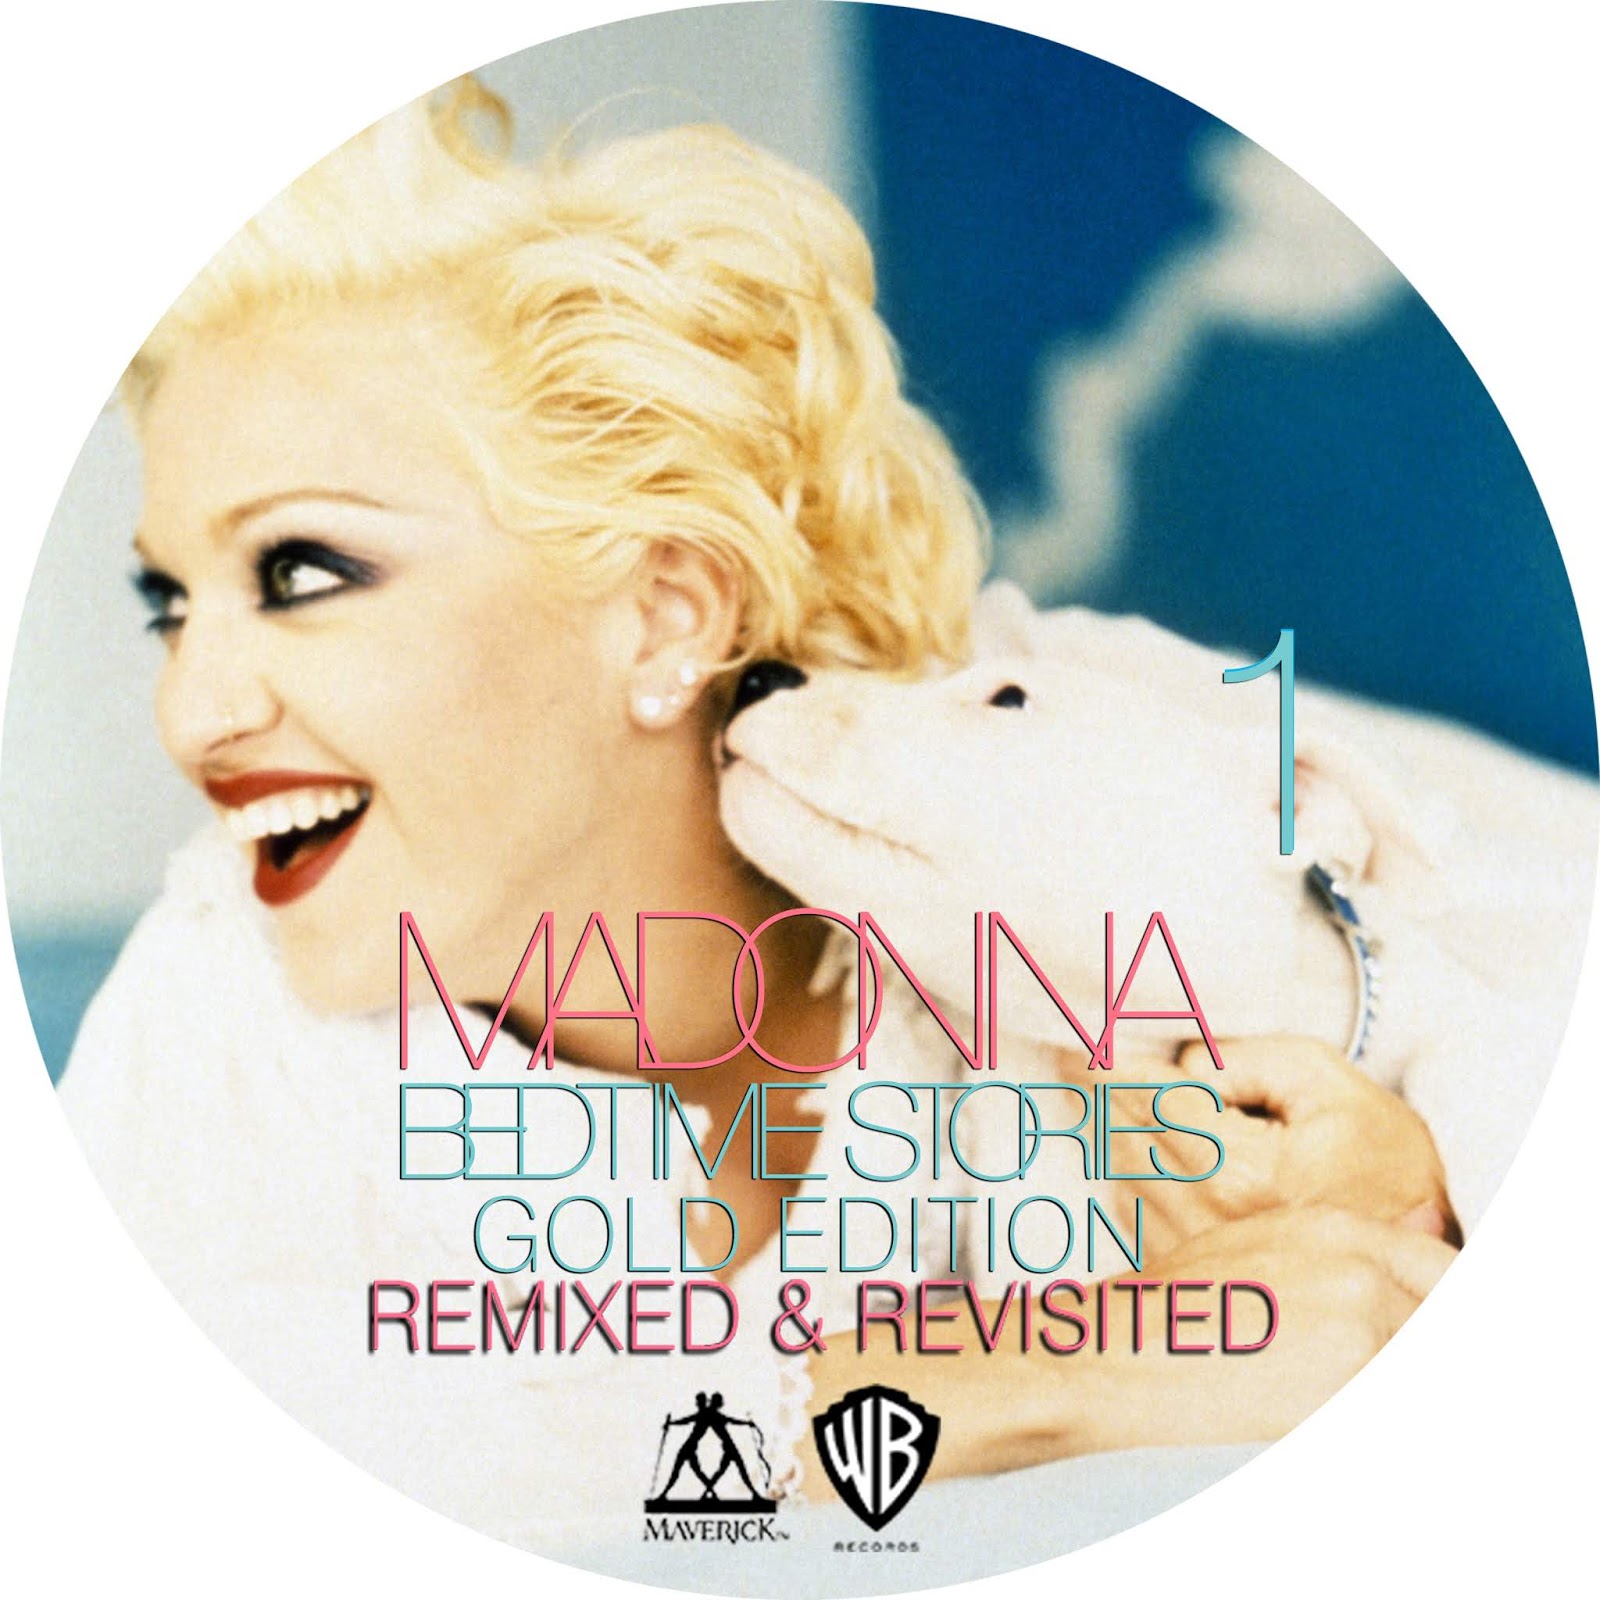 Madonnafreak Productions : Madonna Bedtime Stories Gold Edition Remixed